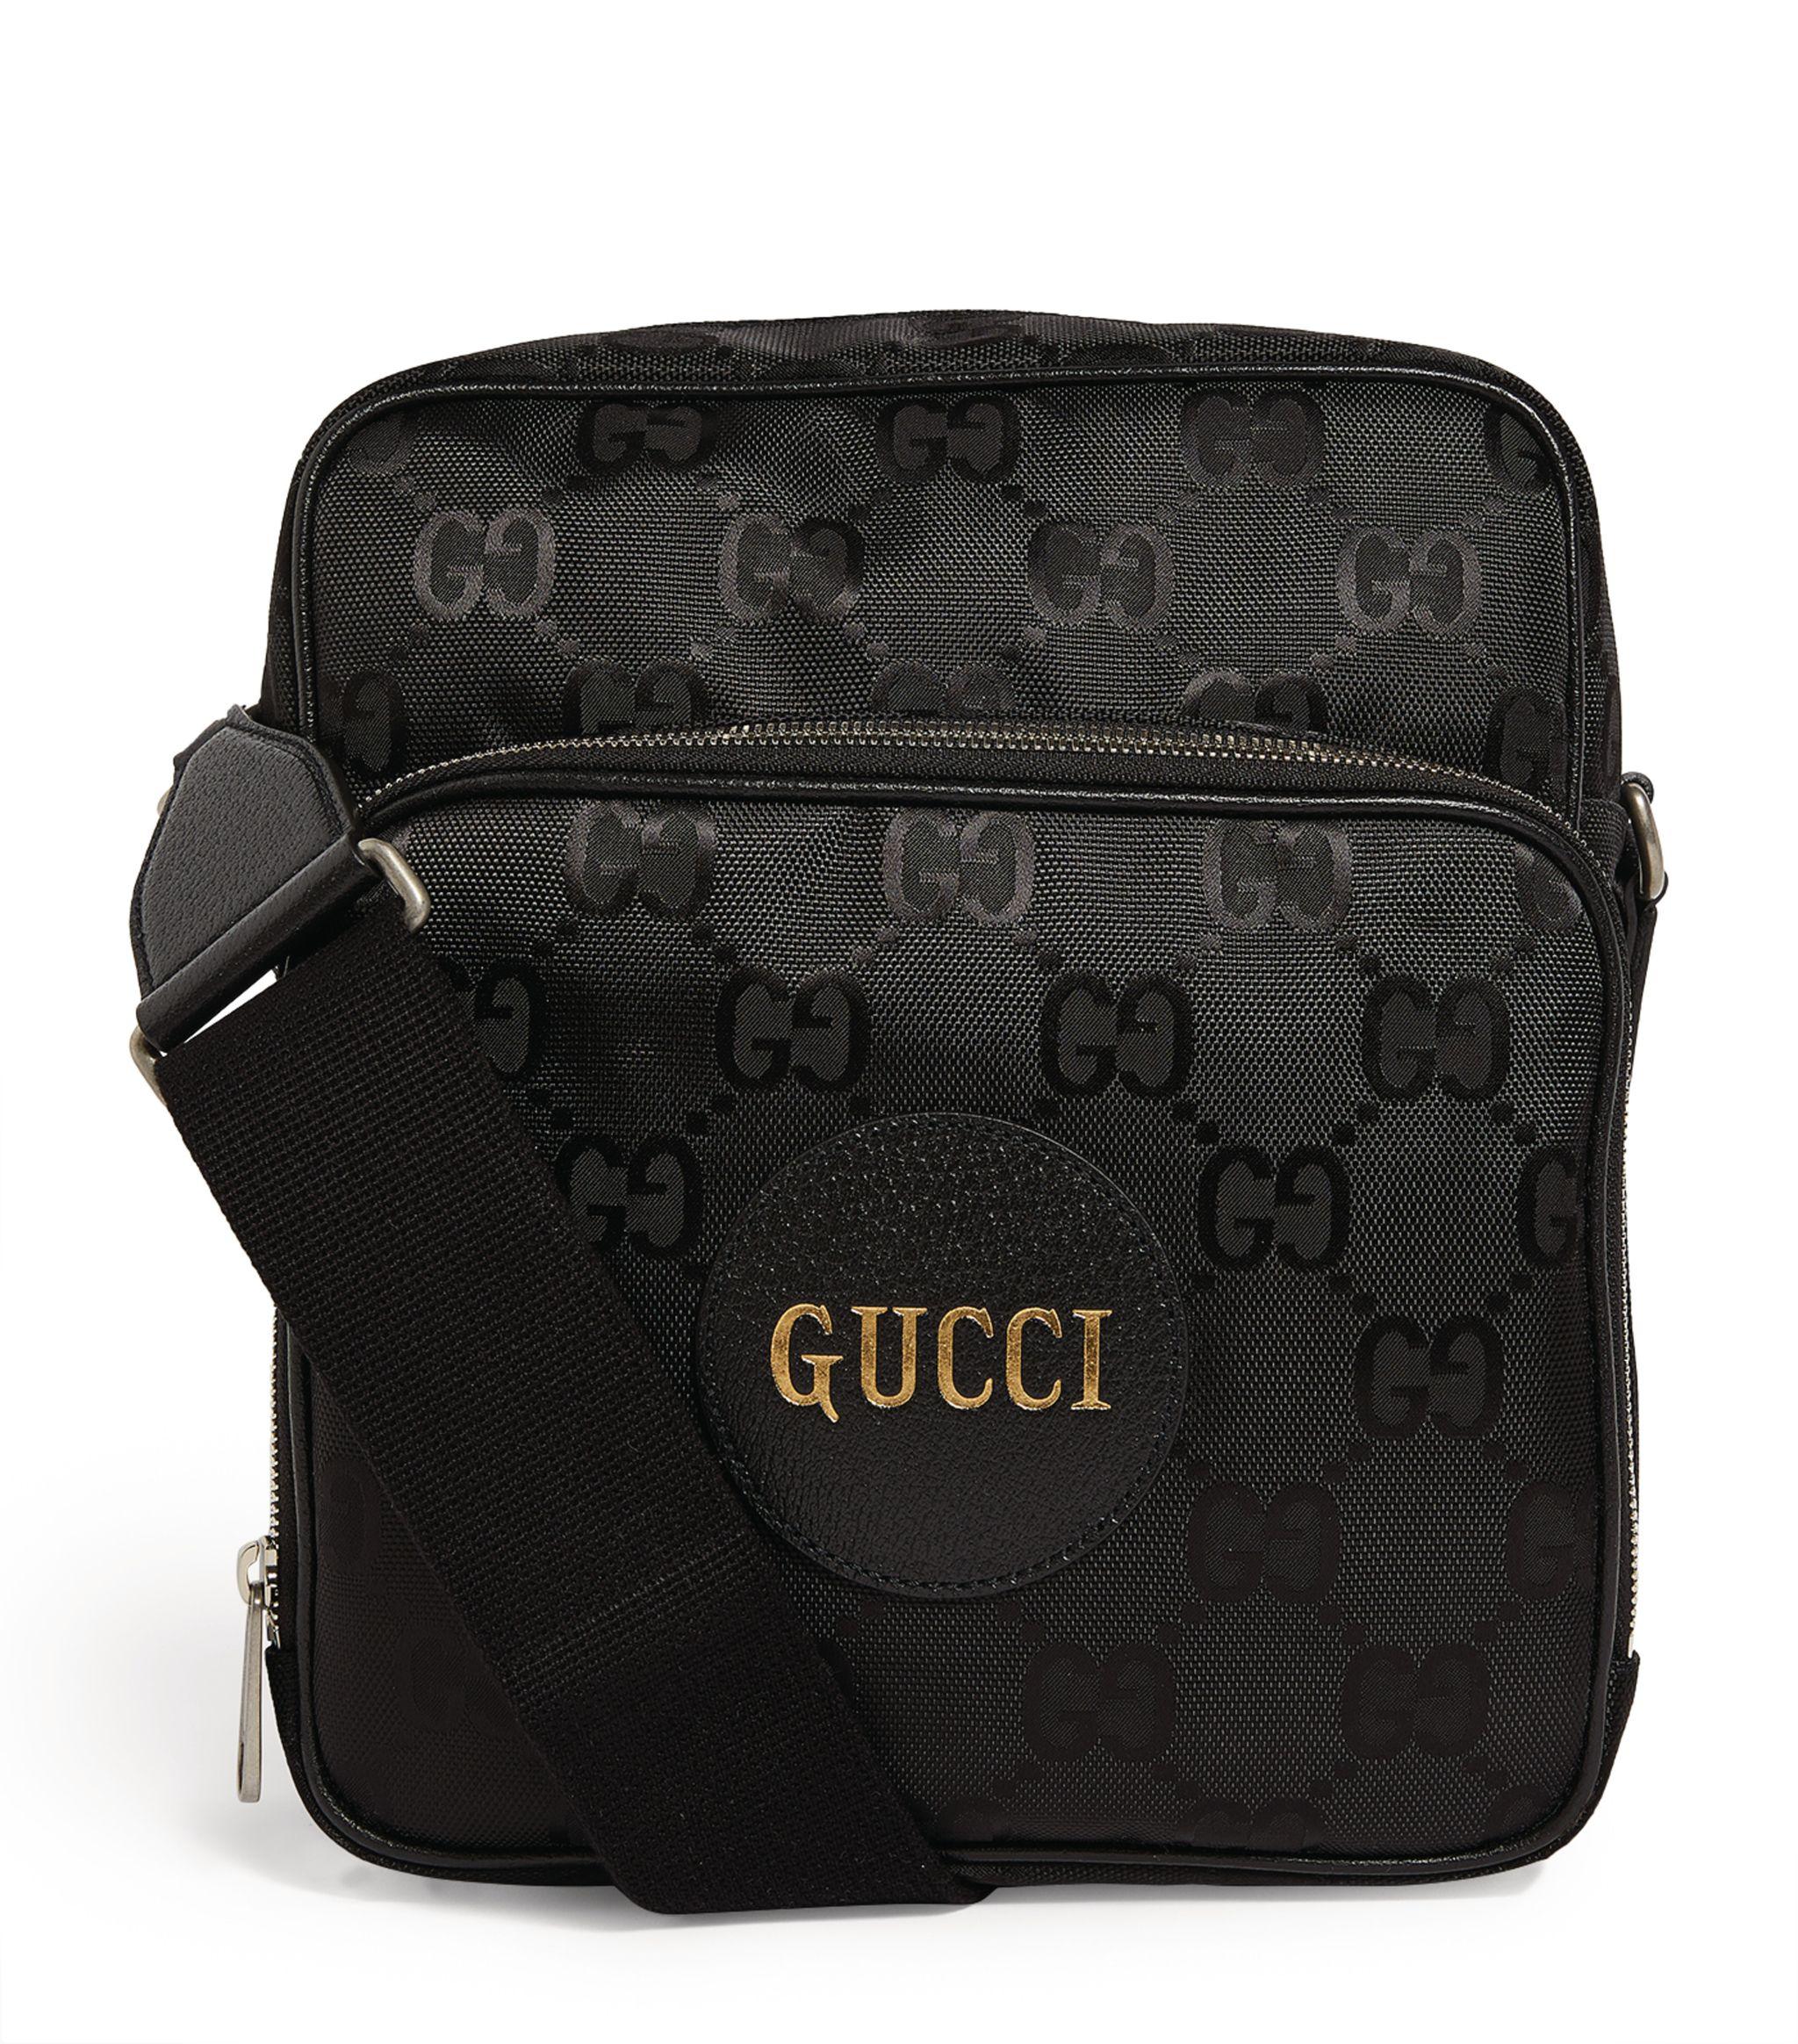 Gucci Synthetic Off The Grid Shoulder Bag in Black for Men - Lyst